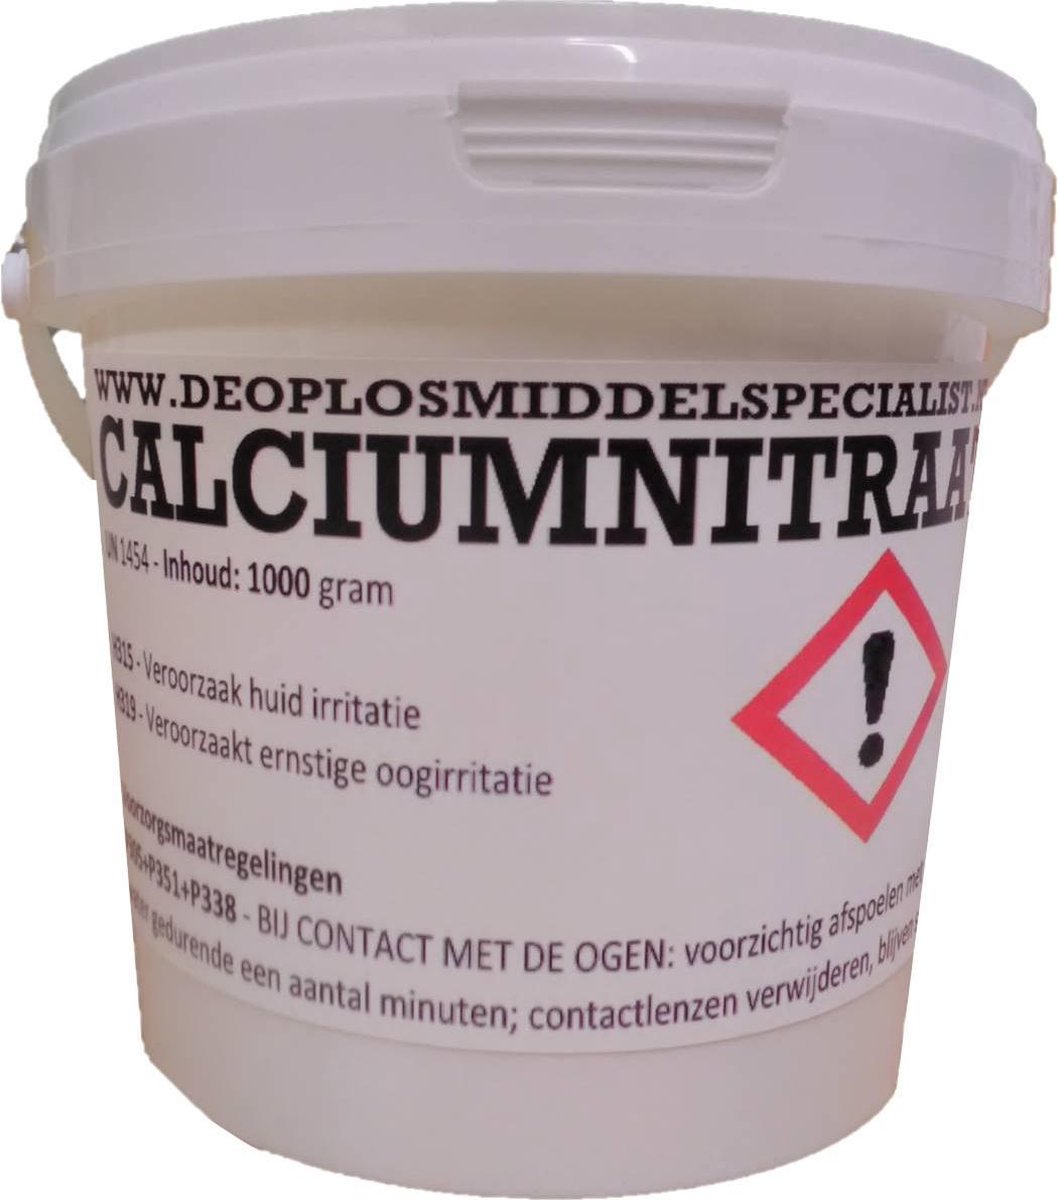 Calciumnitraat 1000gr (kalksalpeter, noorse kalk, calcinit)